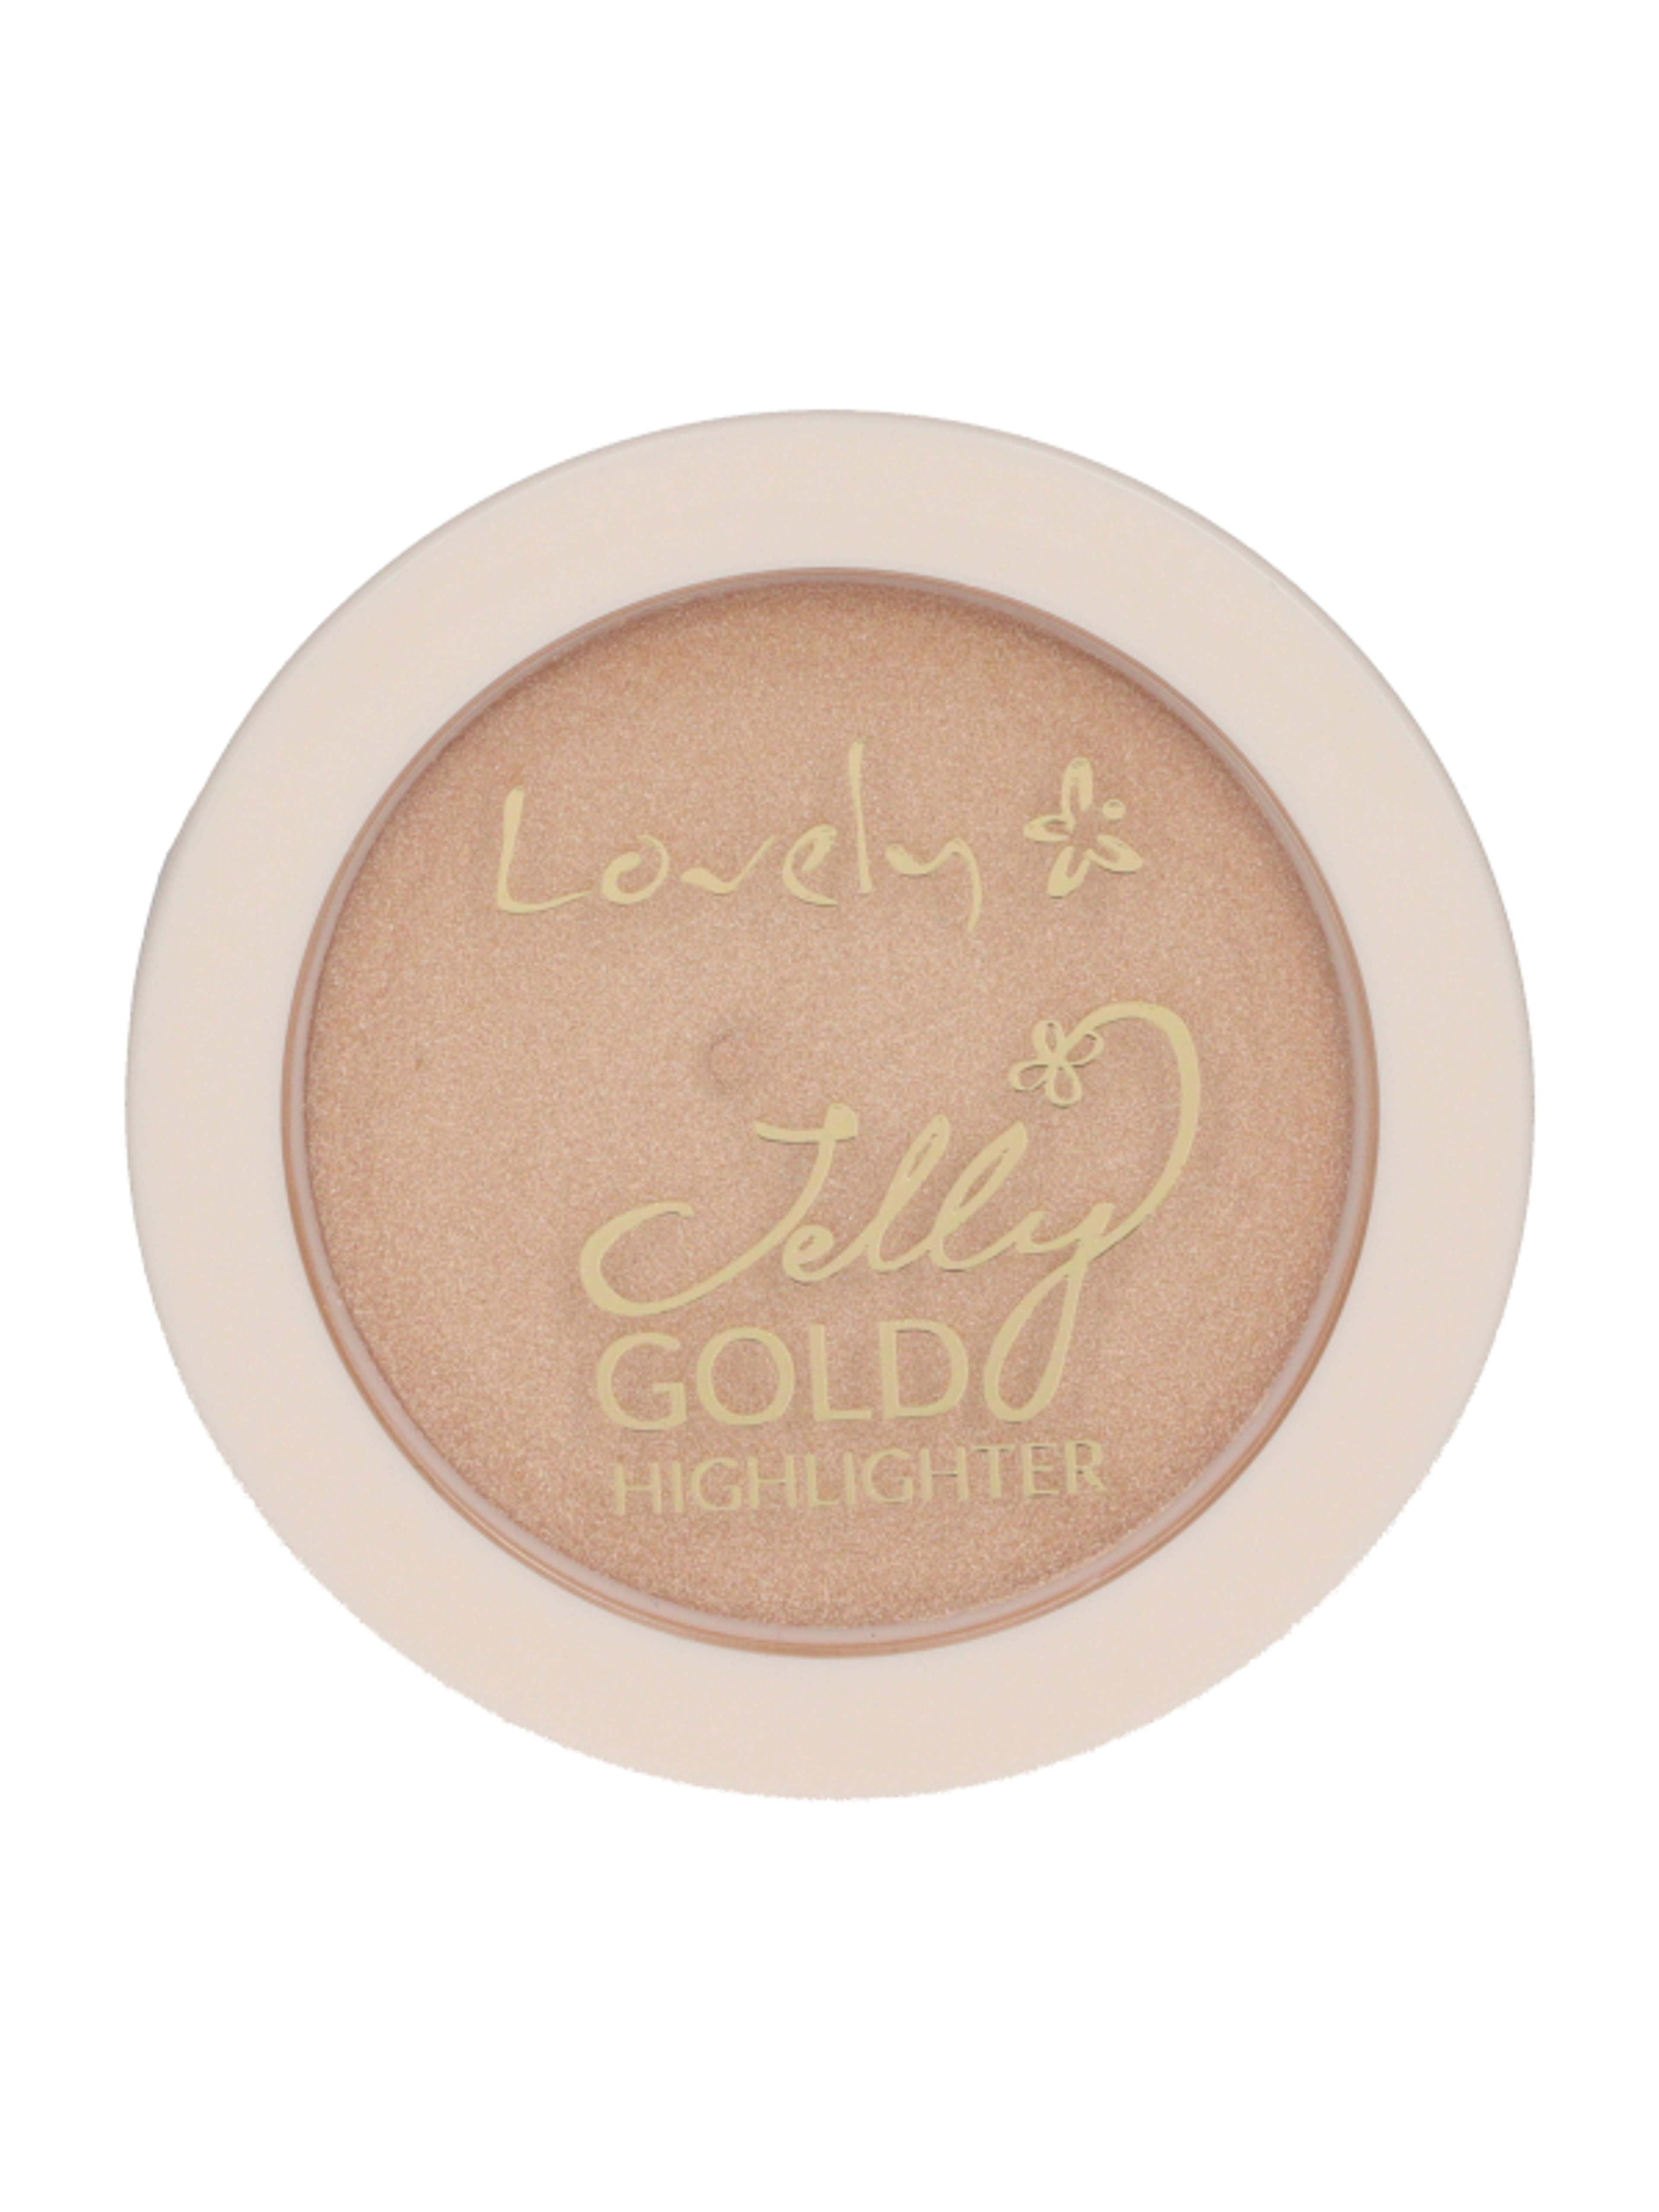 Lovely Jelly Gold highlighter - 1 db